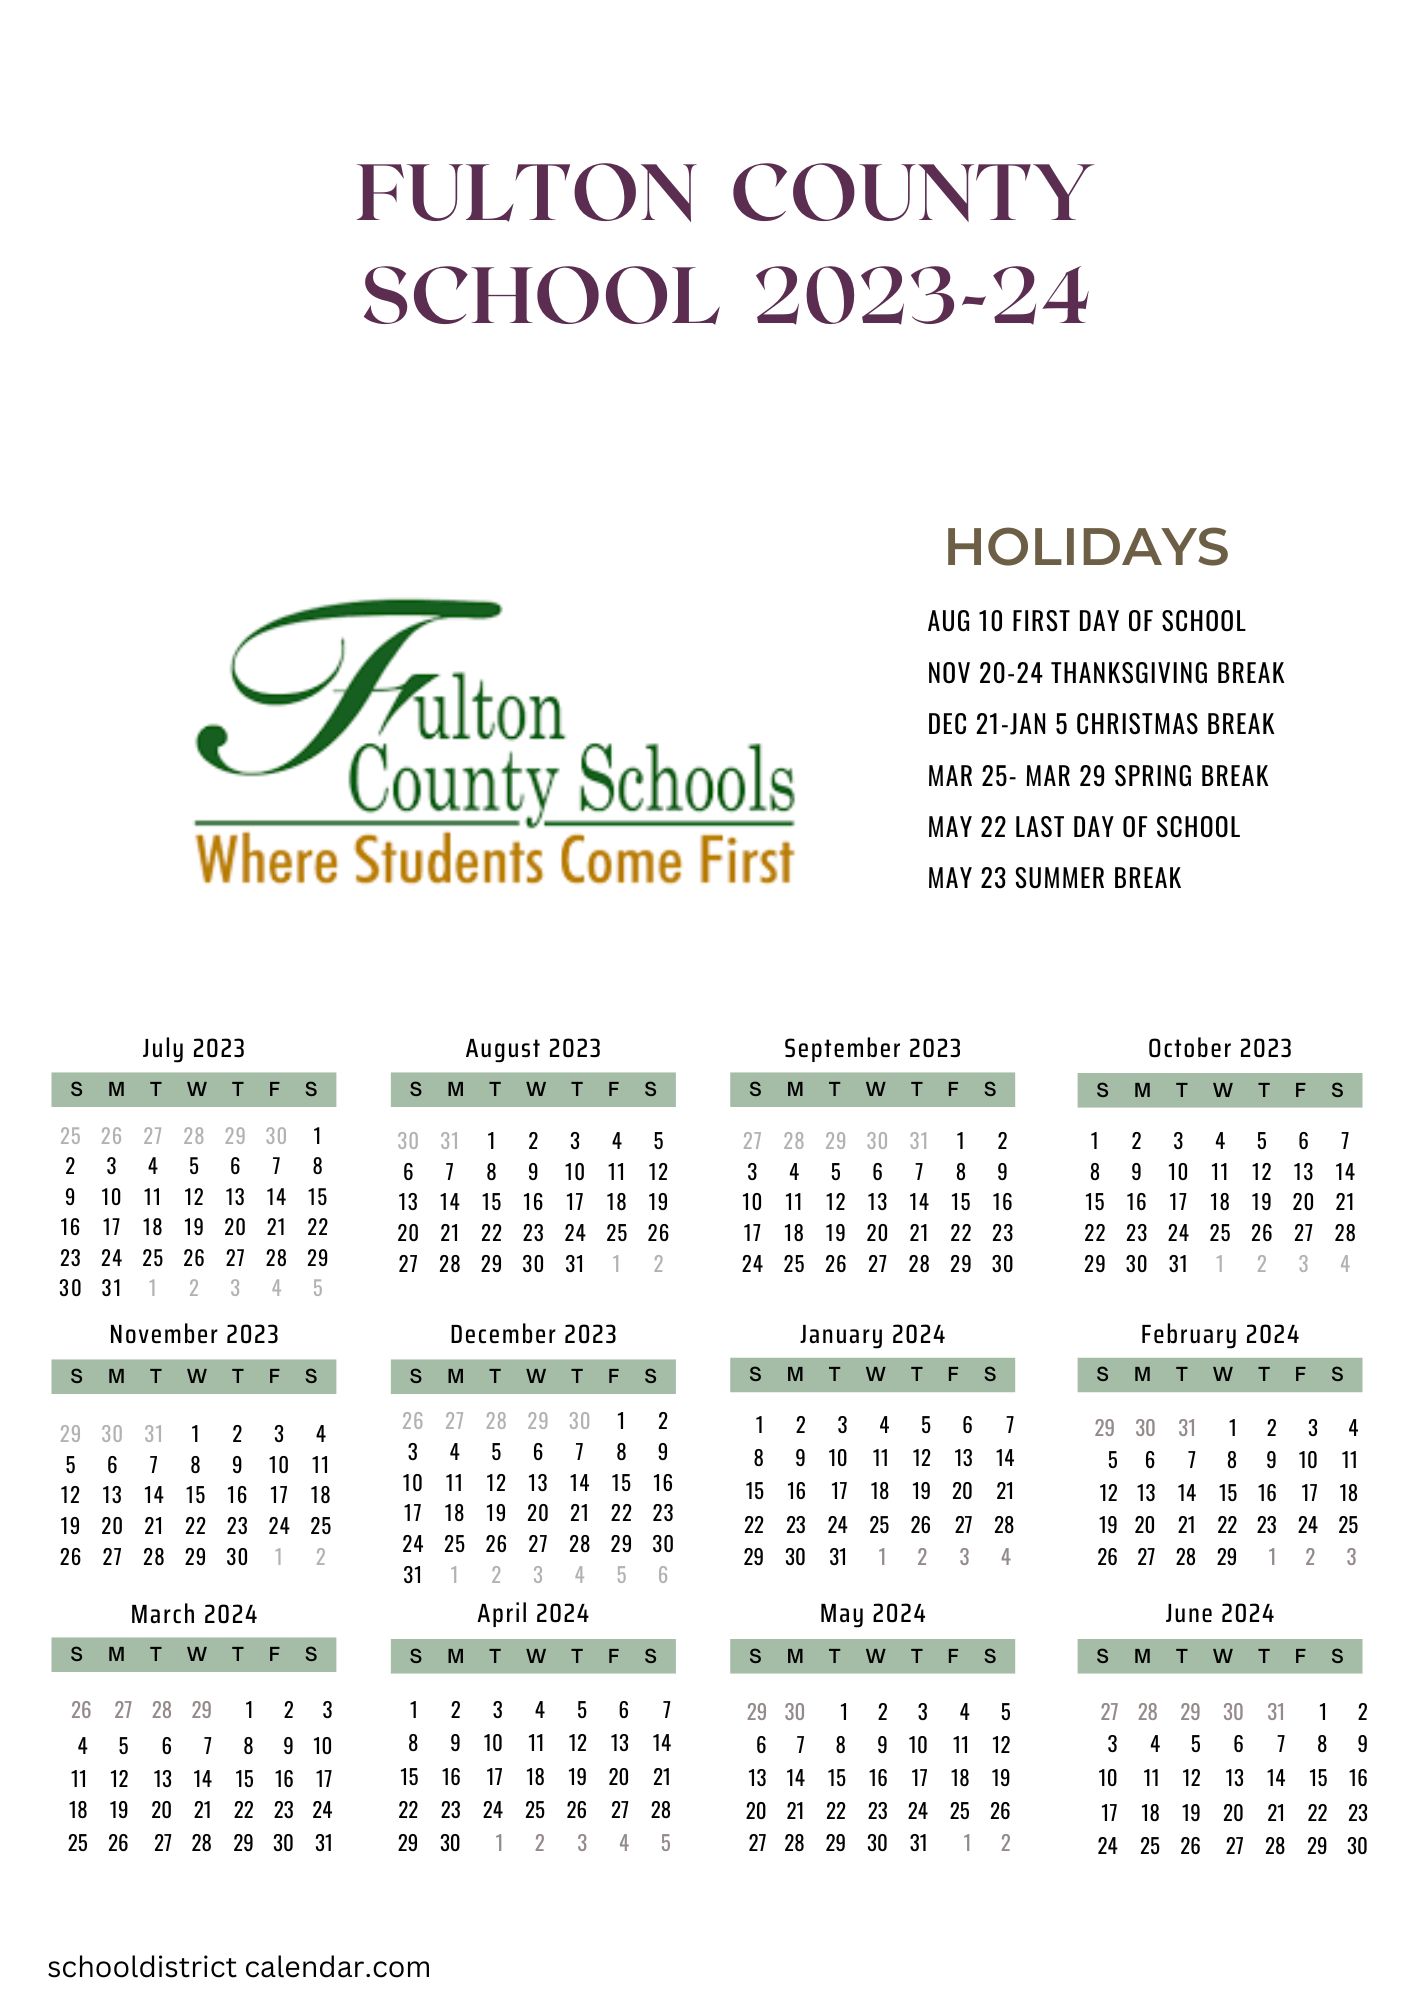 Fulton County Schools Calendar Holidays 2023-2024